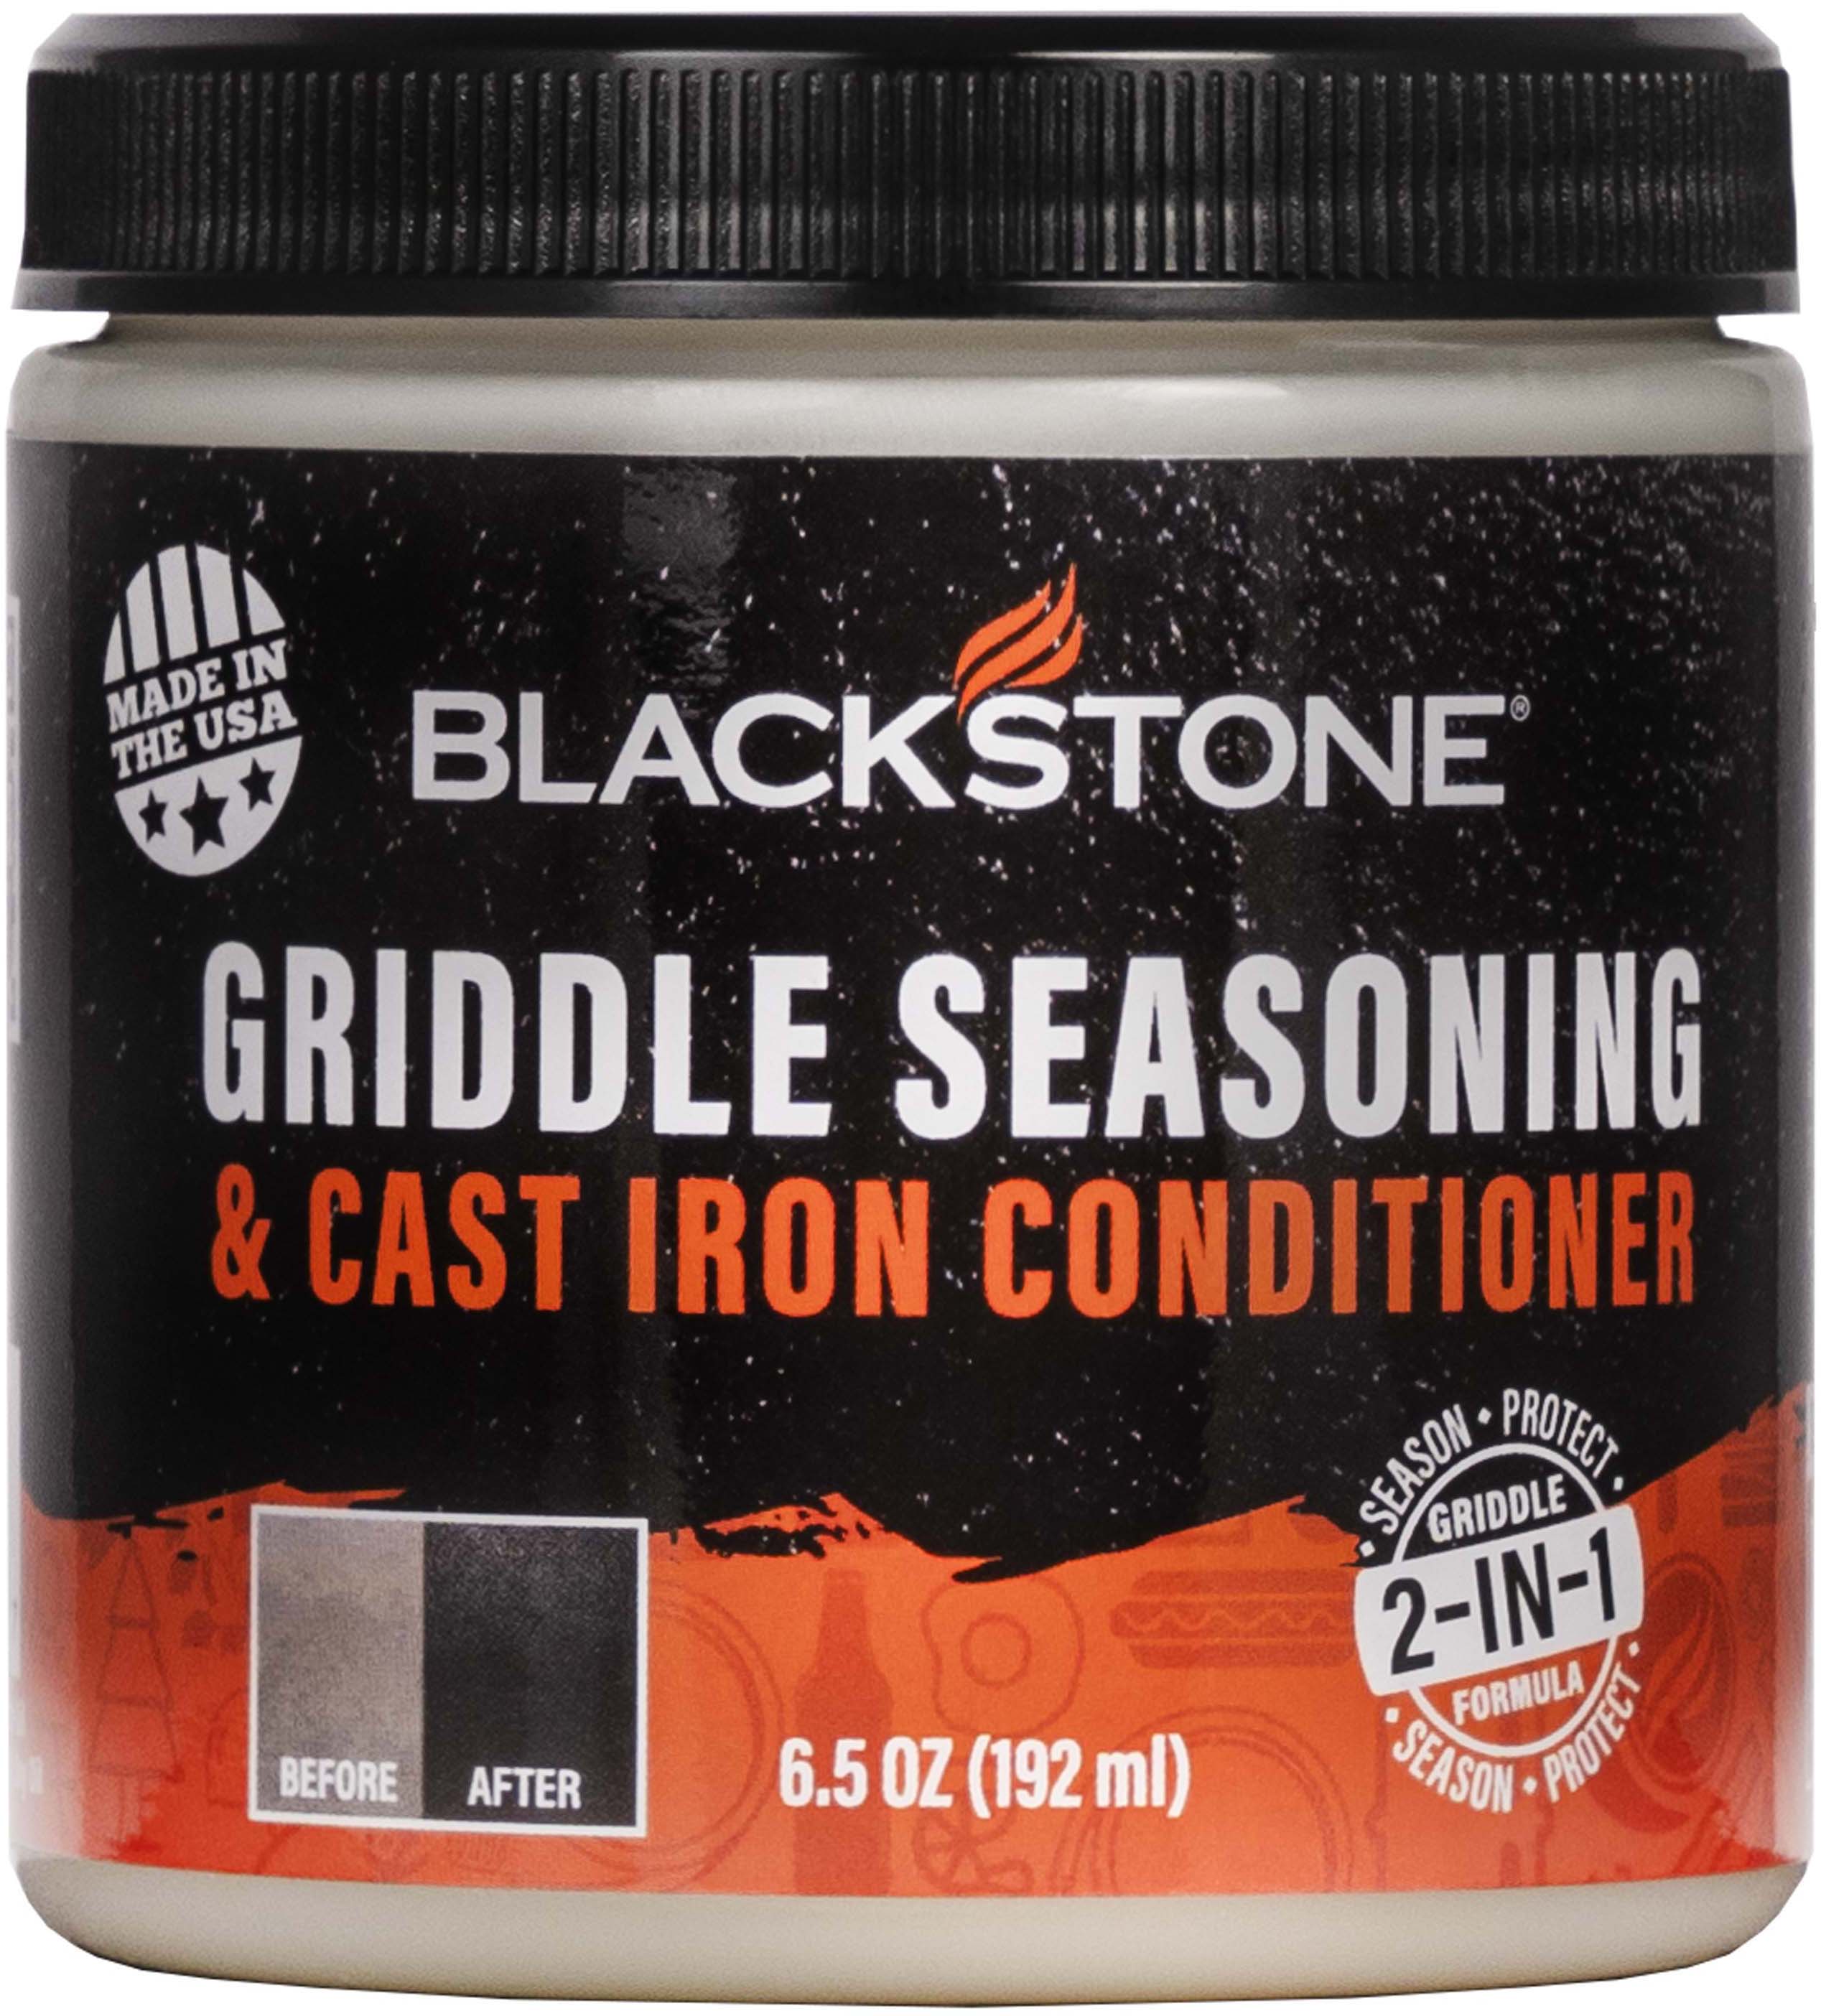 https://cs1.0ps.us/original/opplanet-blackstone-griddle-seasoning-and-cast-iron-conditioner-4114-main-1